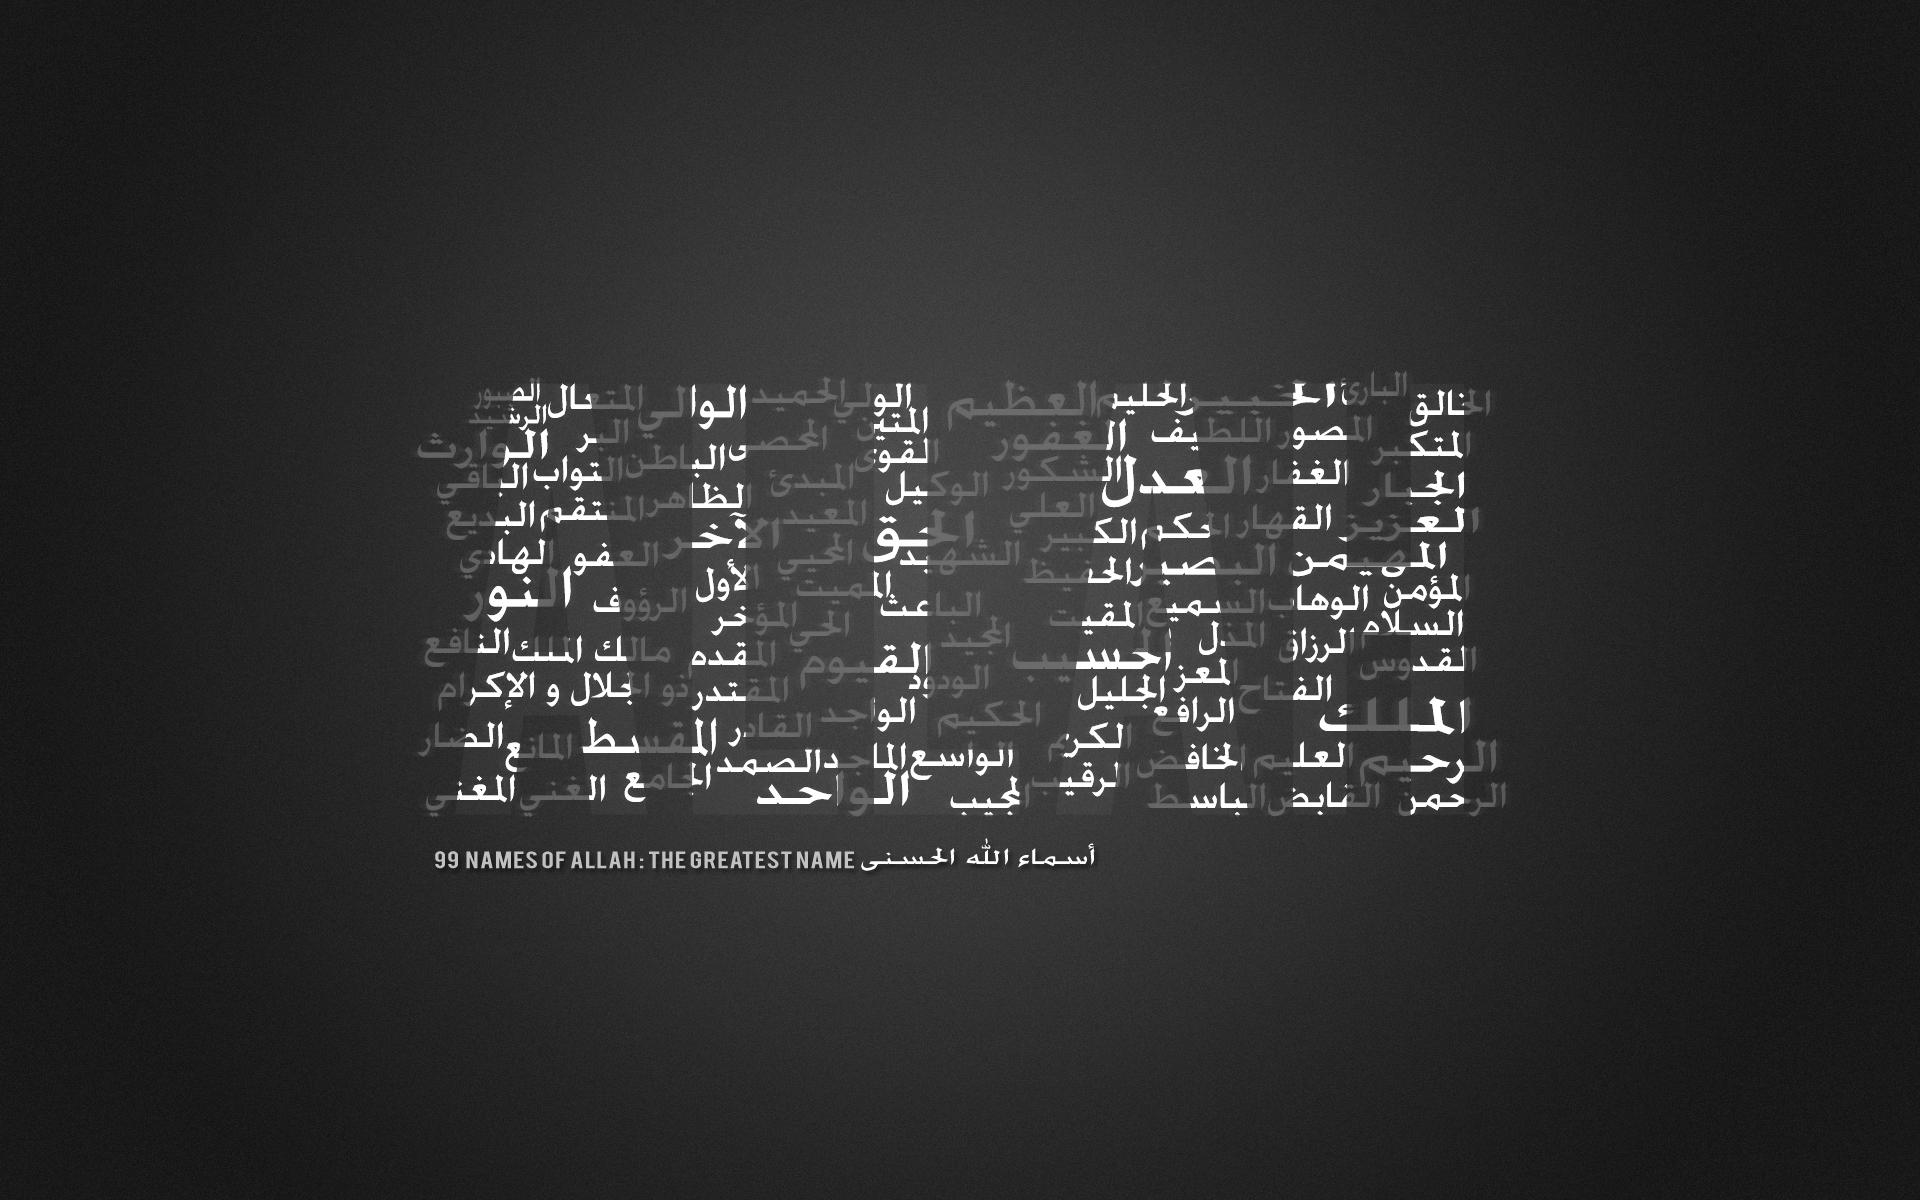 99 Names of Allah HD Wallpaper, get it now